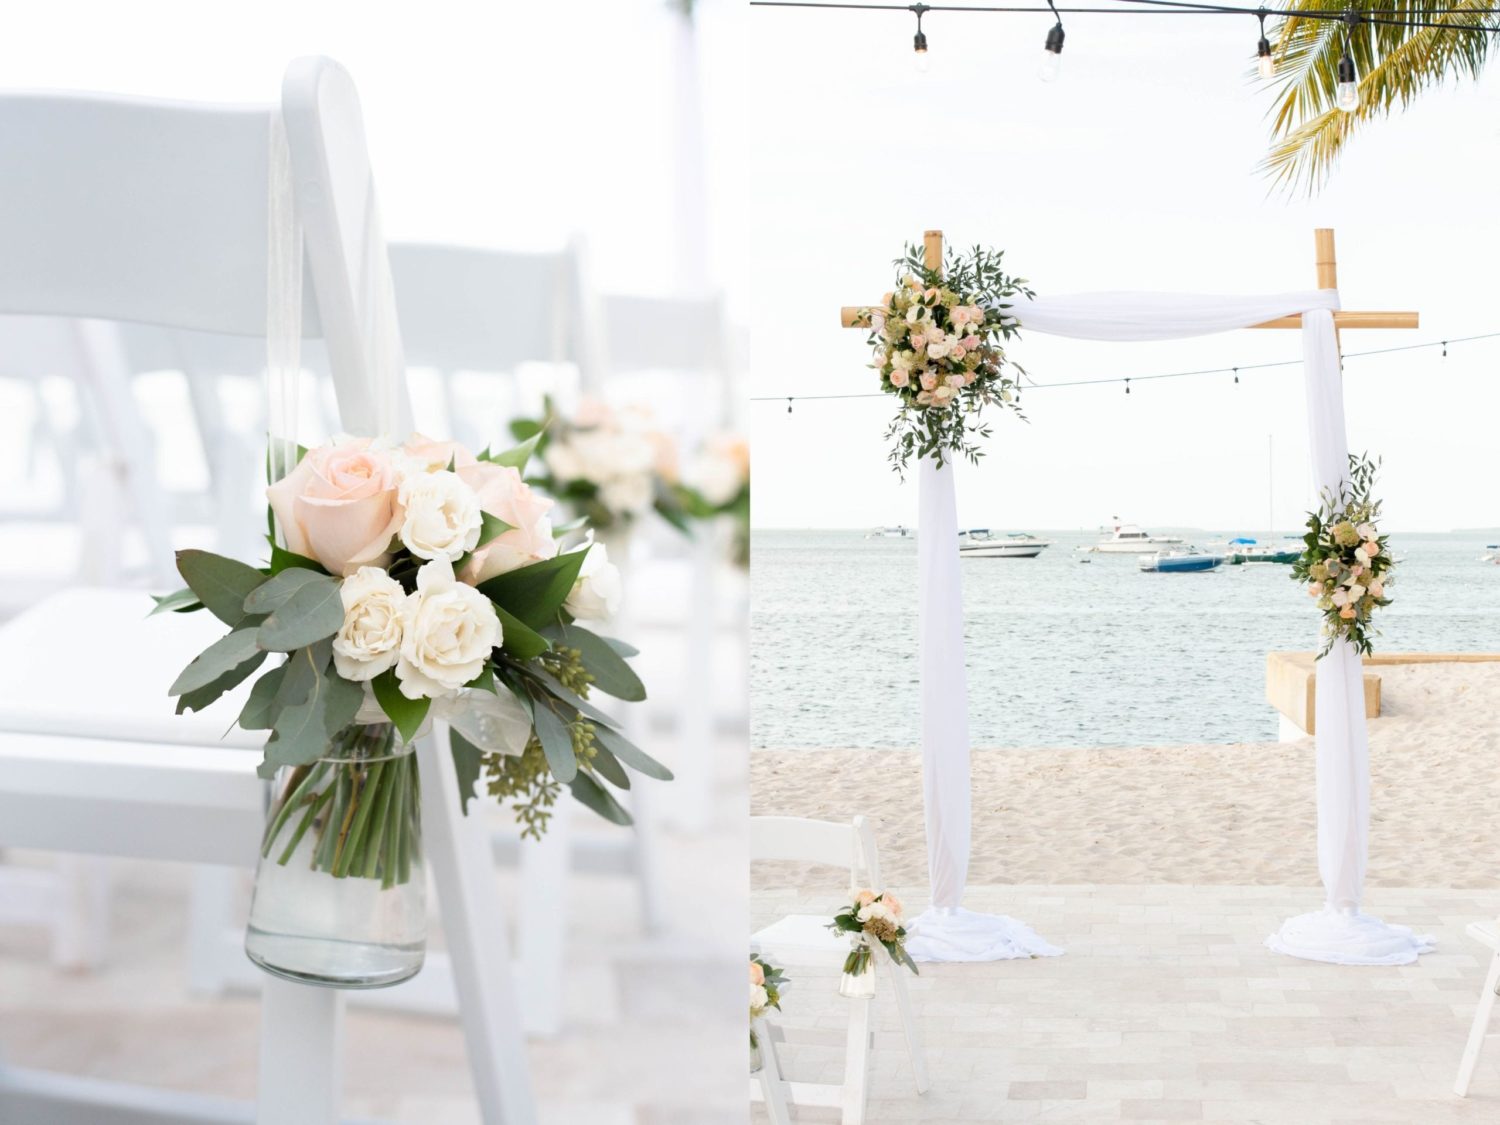 Key west beach wedding flowers and wedding arch ceremony set up